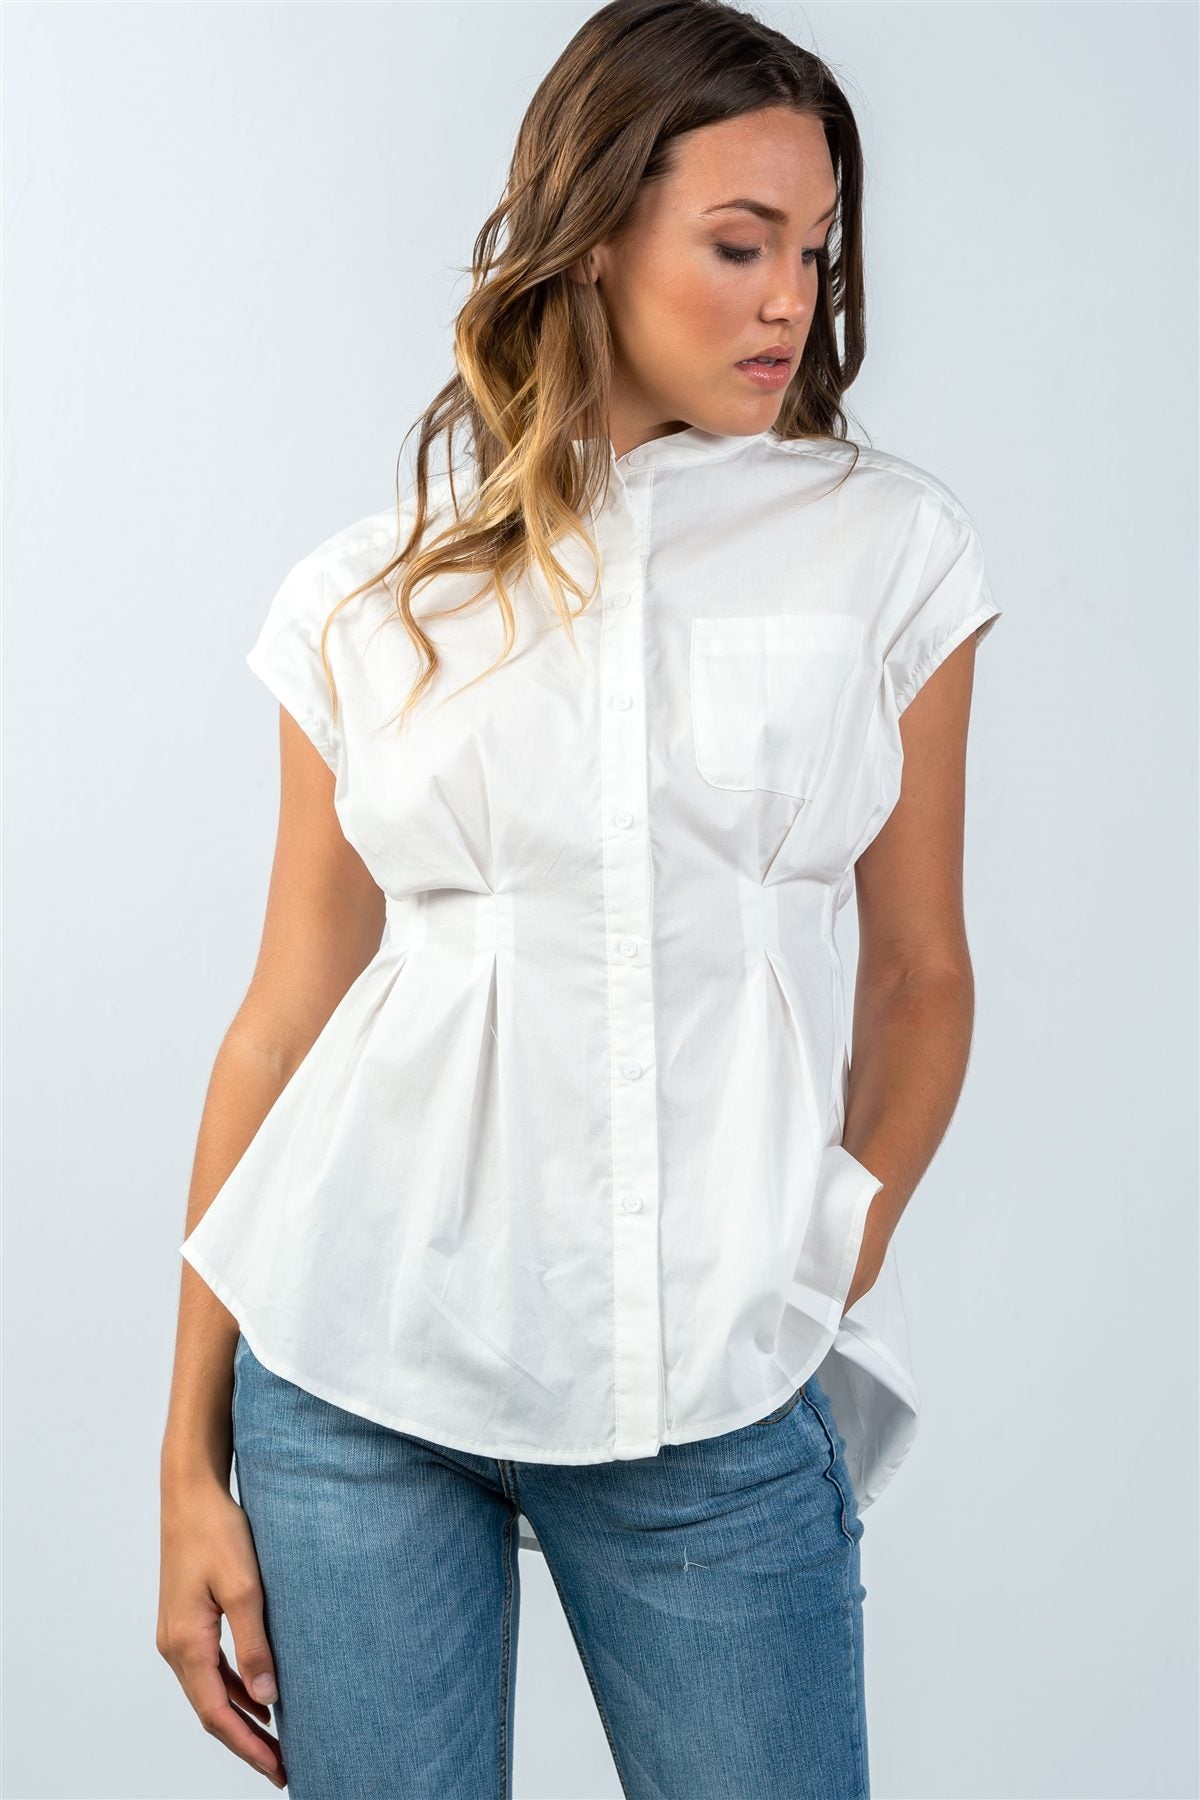 Ladies fashion round neckline white one pocket cap sleeve blouse